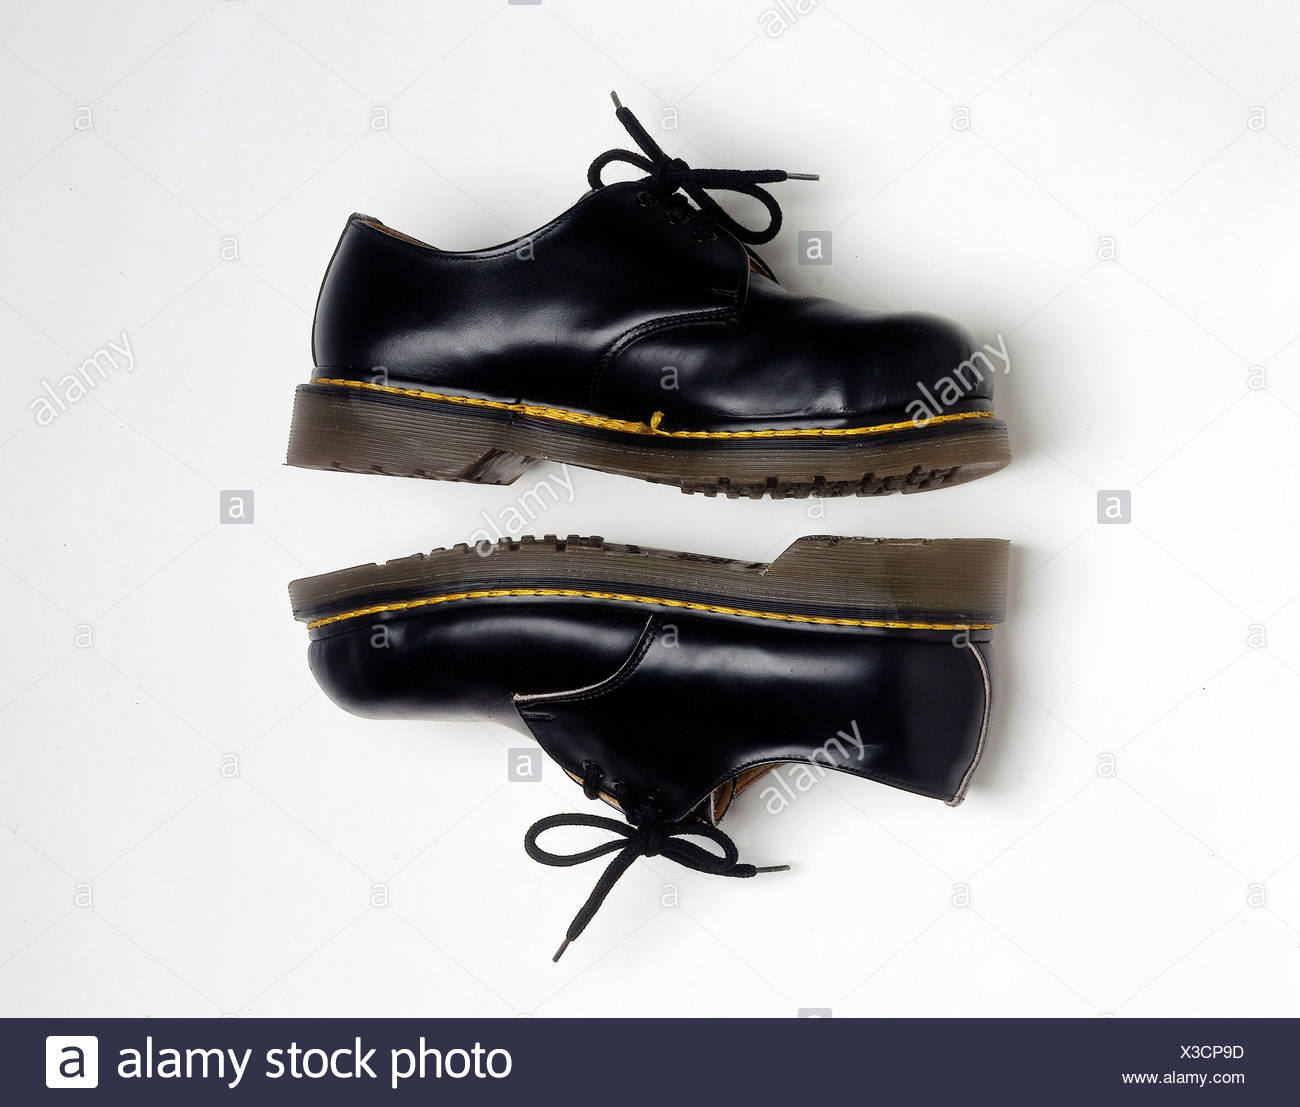 doc martin steel toe cap shoes